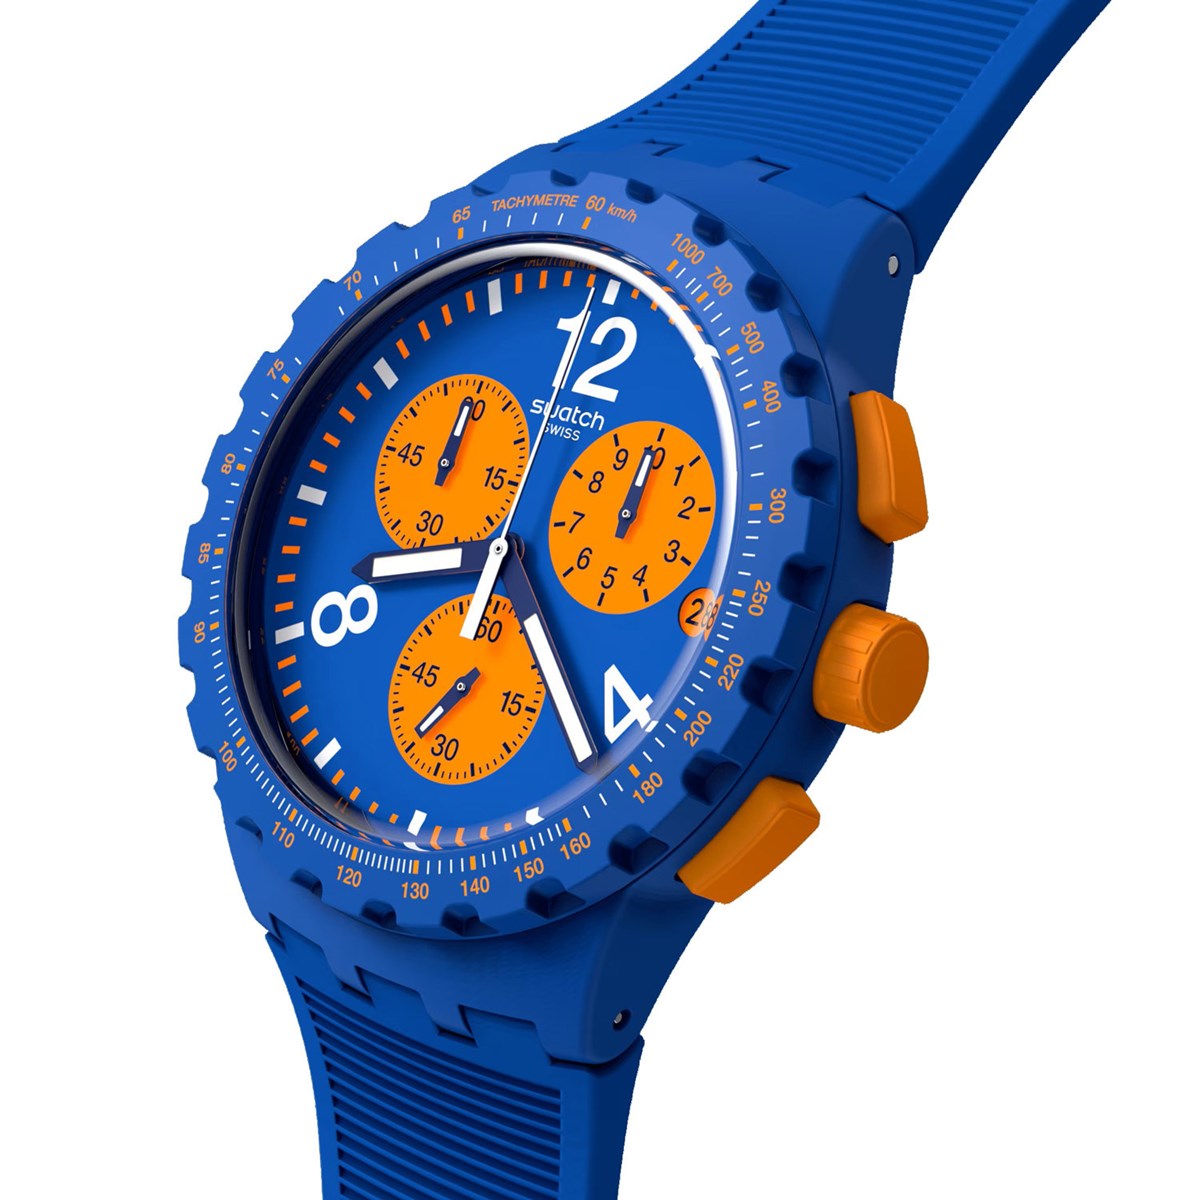 Montre Swatch chrono Primarily Blue - vue 4